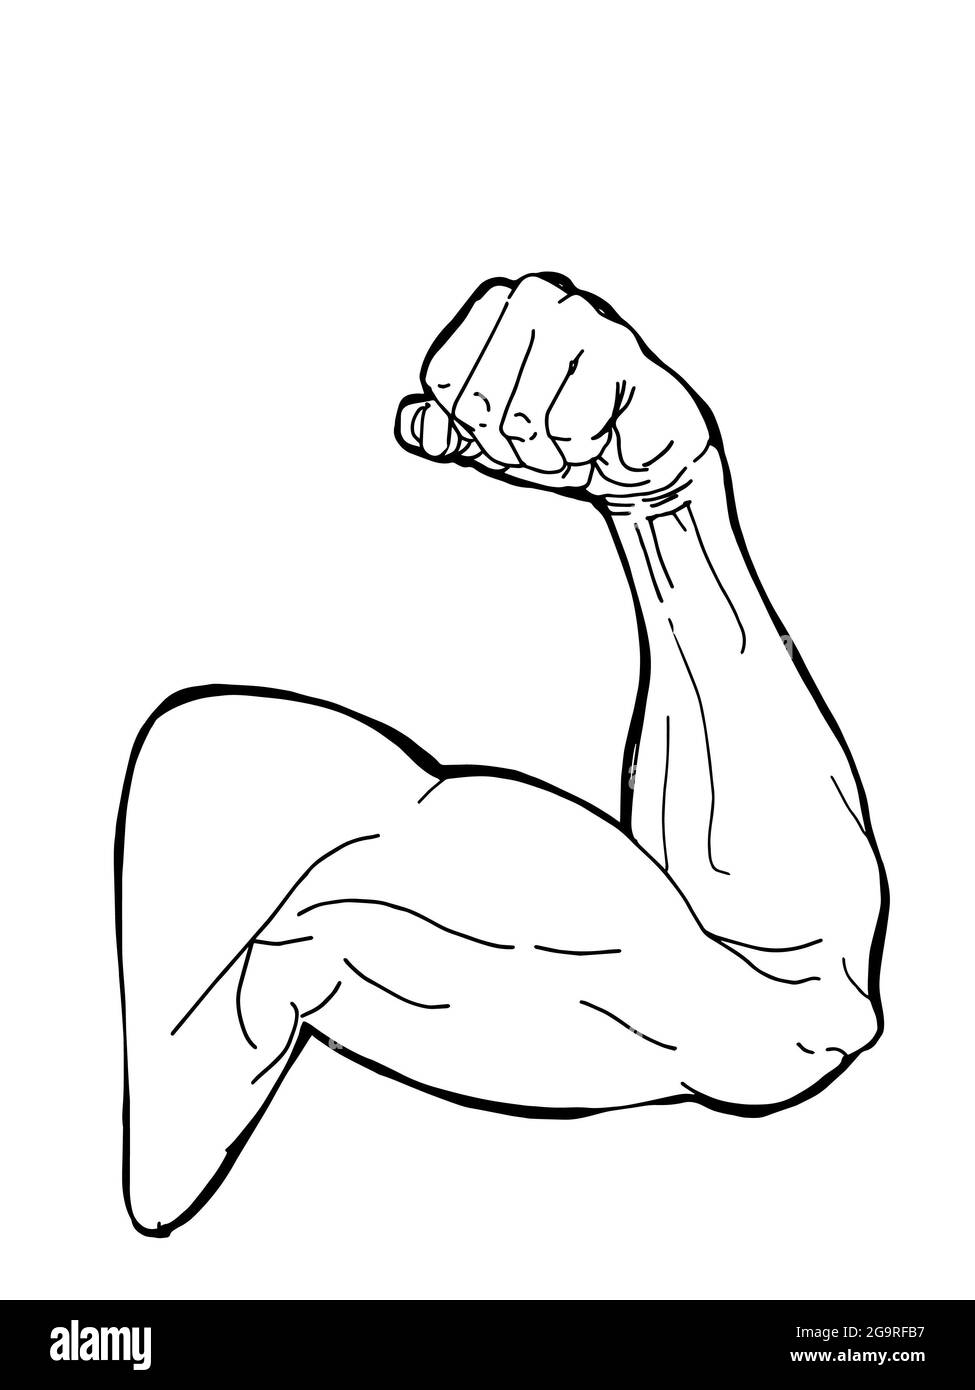 Sport man,  muscular strong  arm, illustration ,line art. Stock Photo